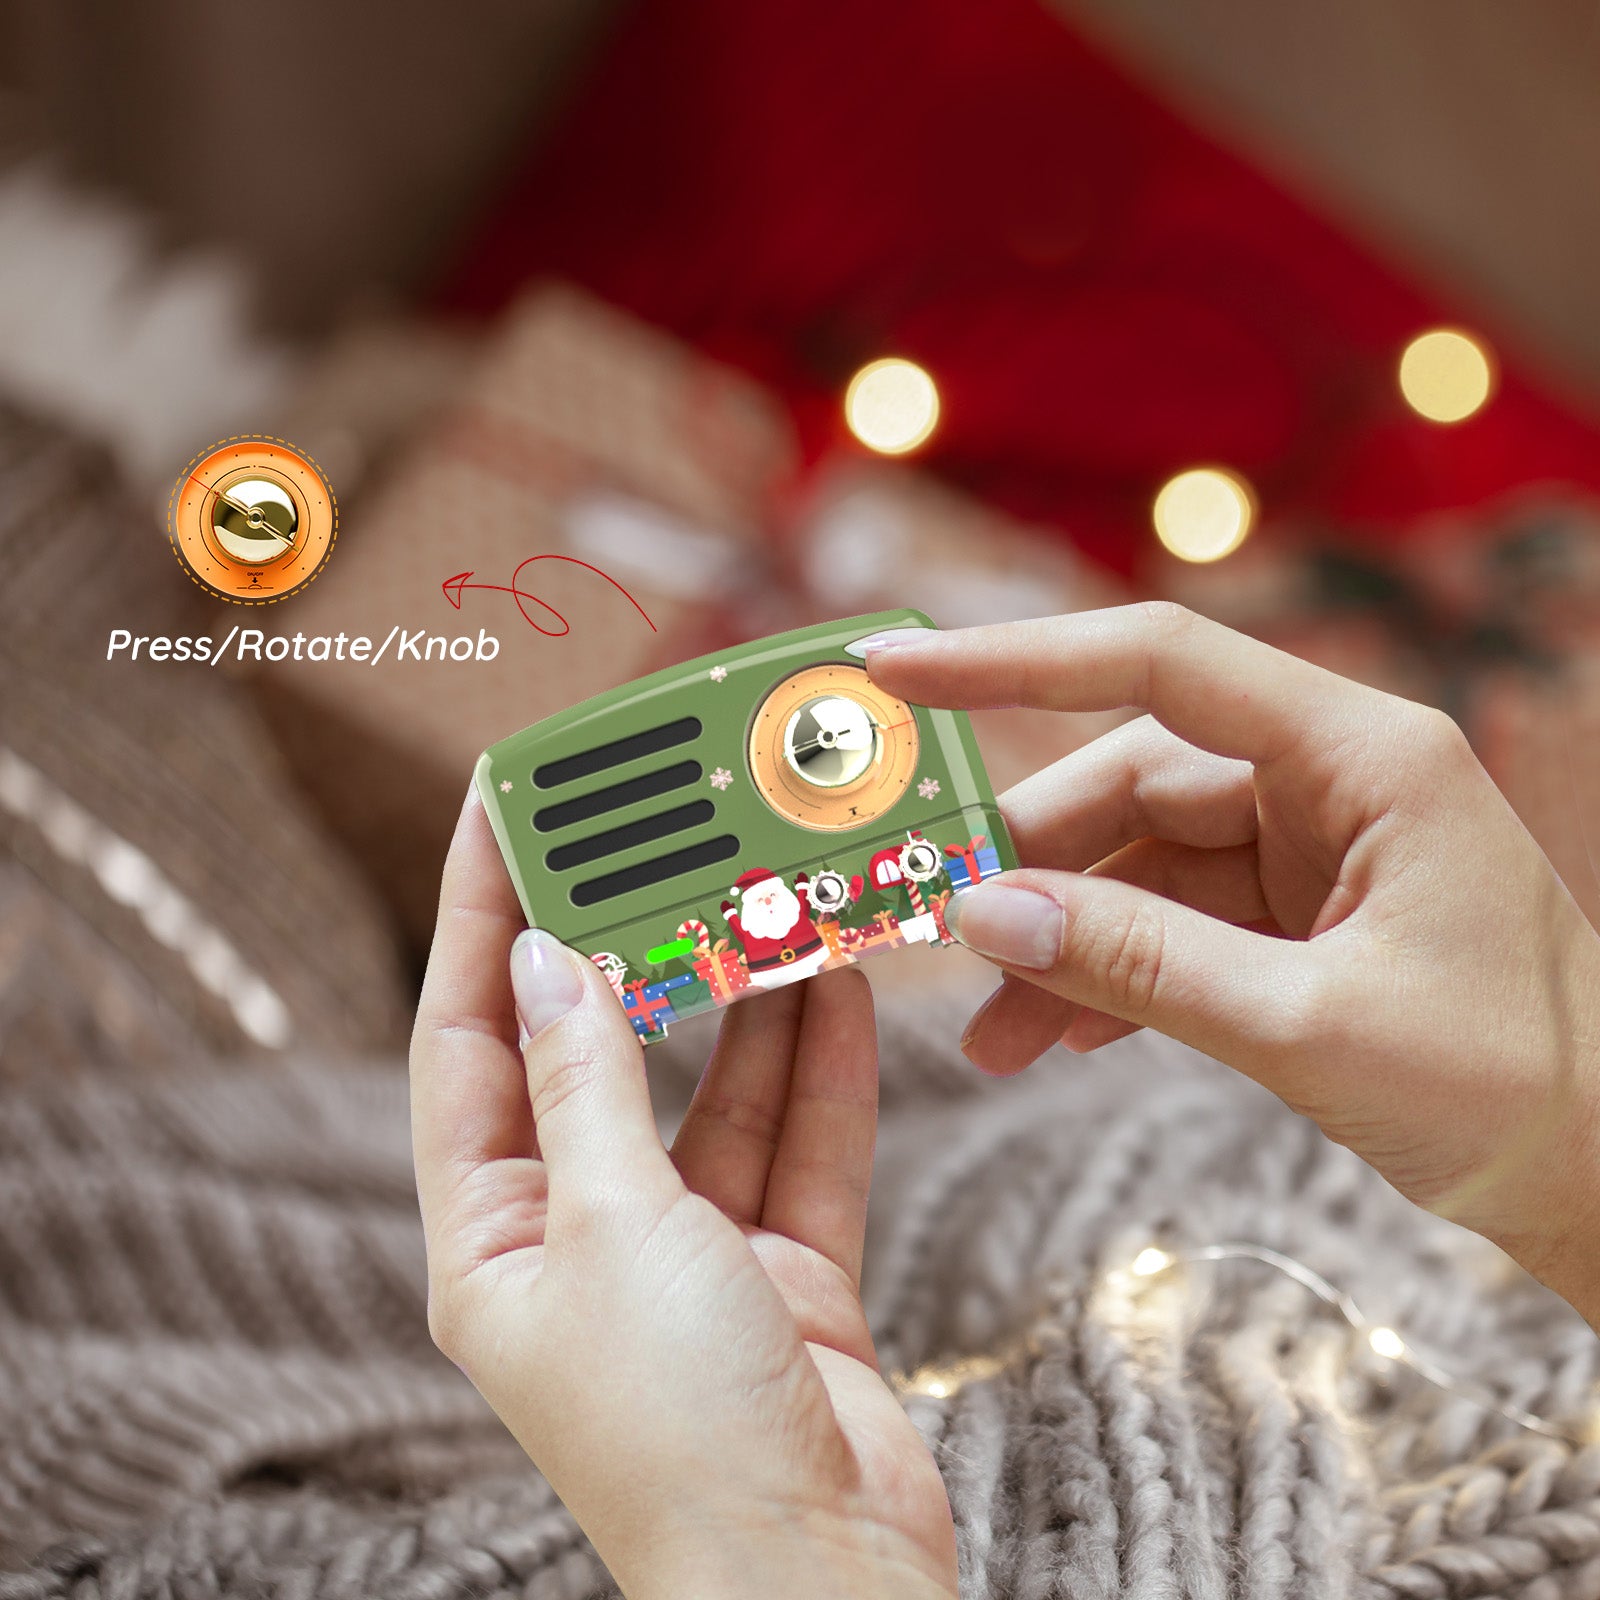 MUZENミューゼン PETA Bluetooth スピーカー  クリスマスグリーン